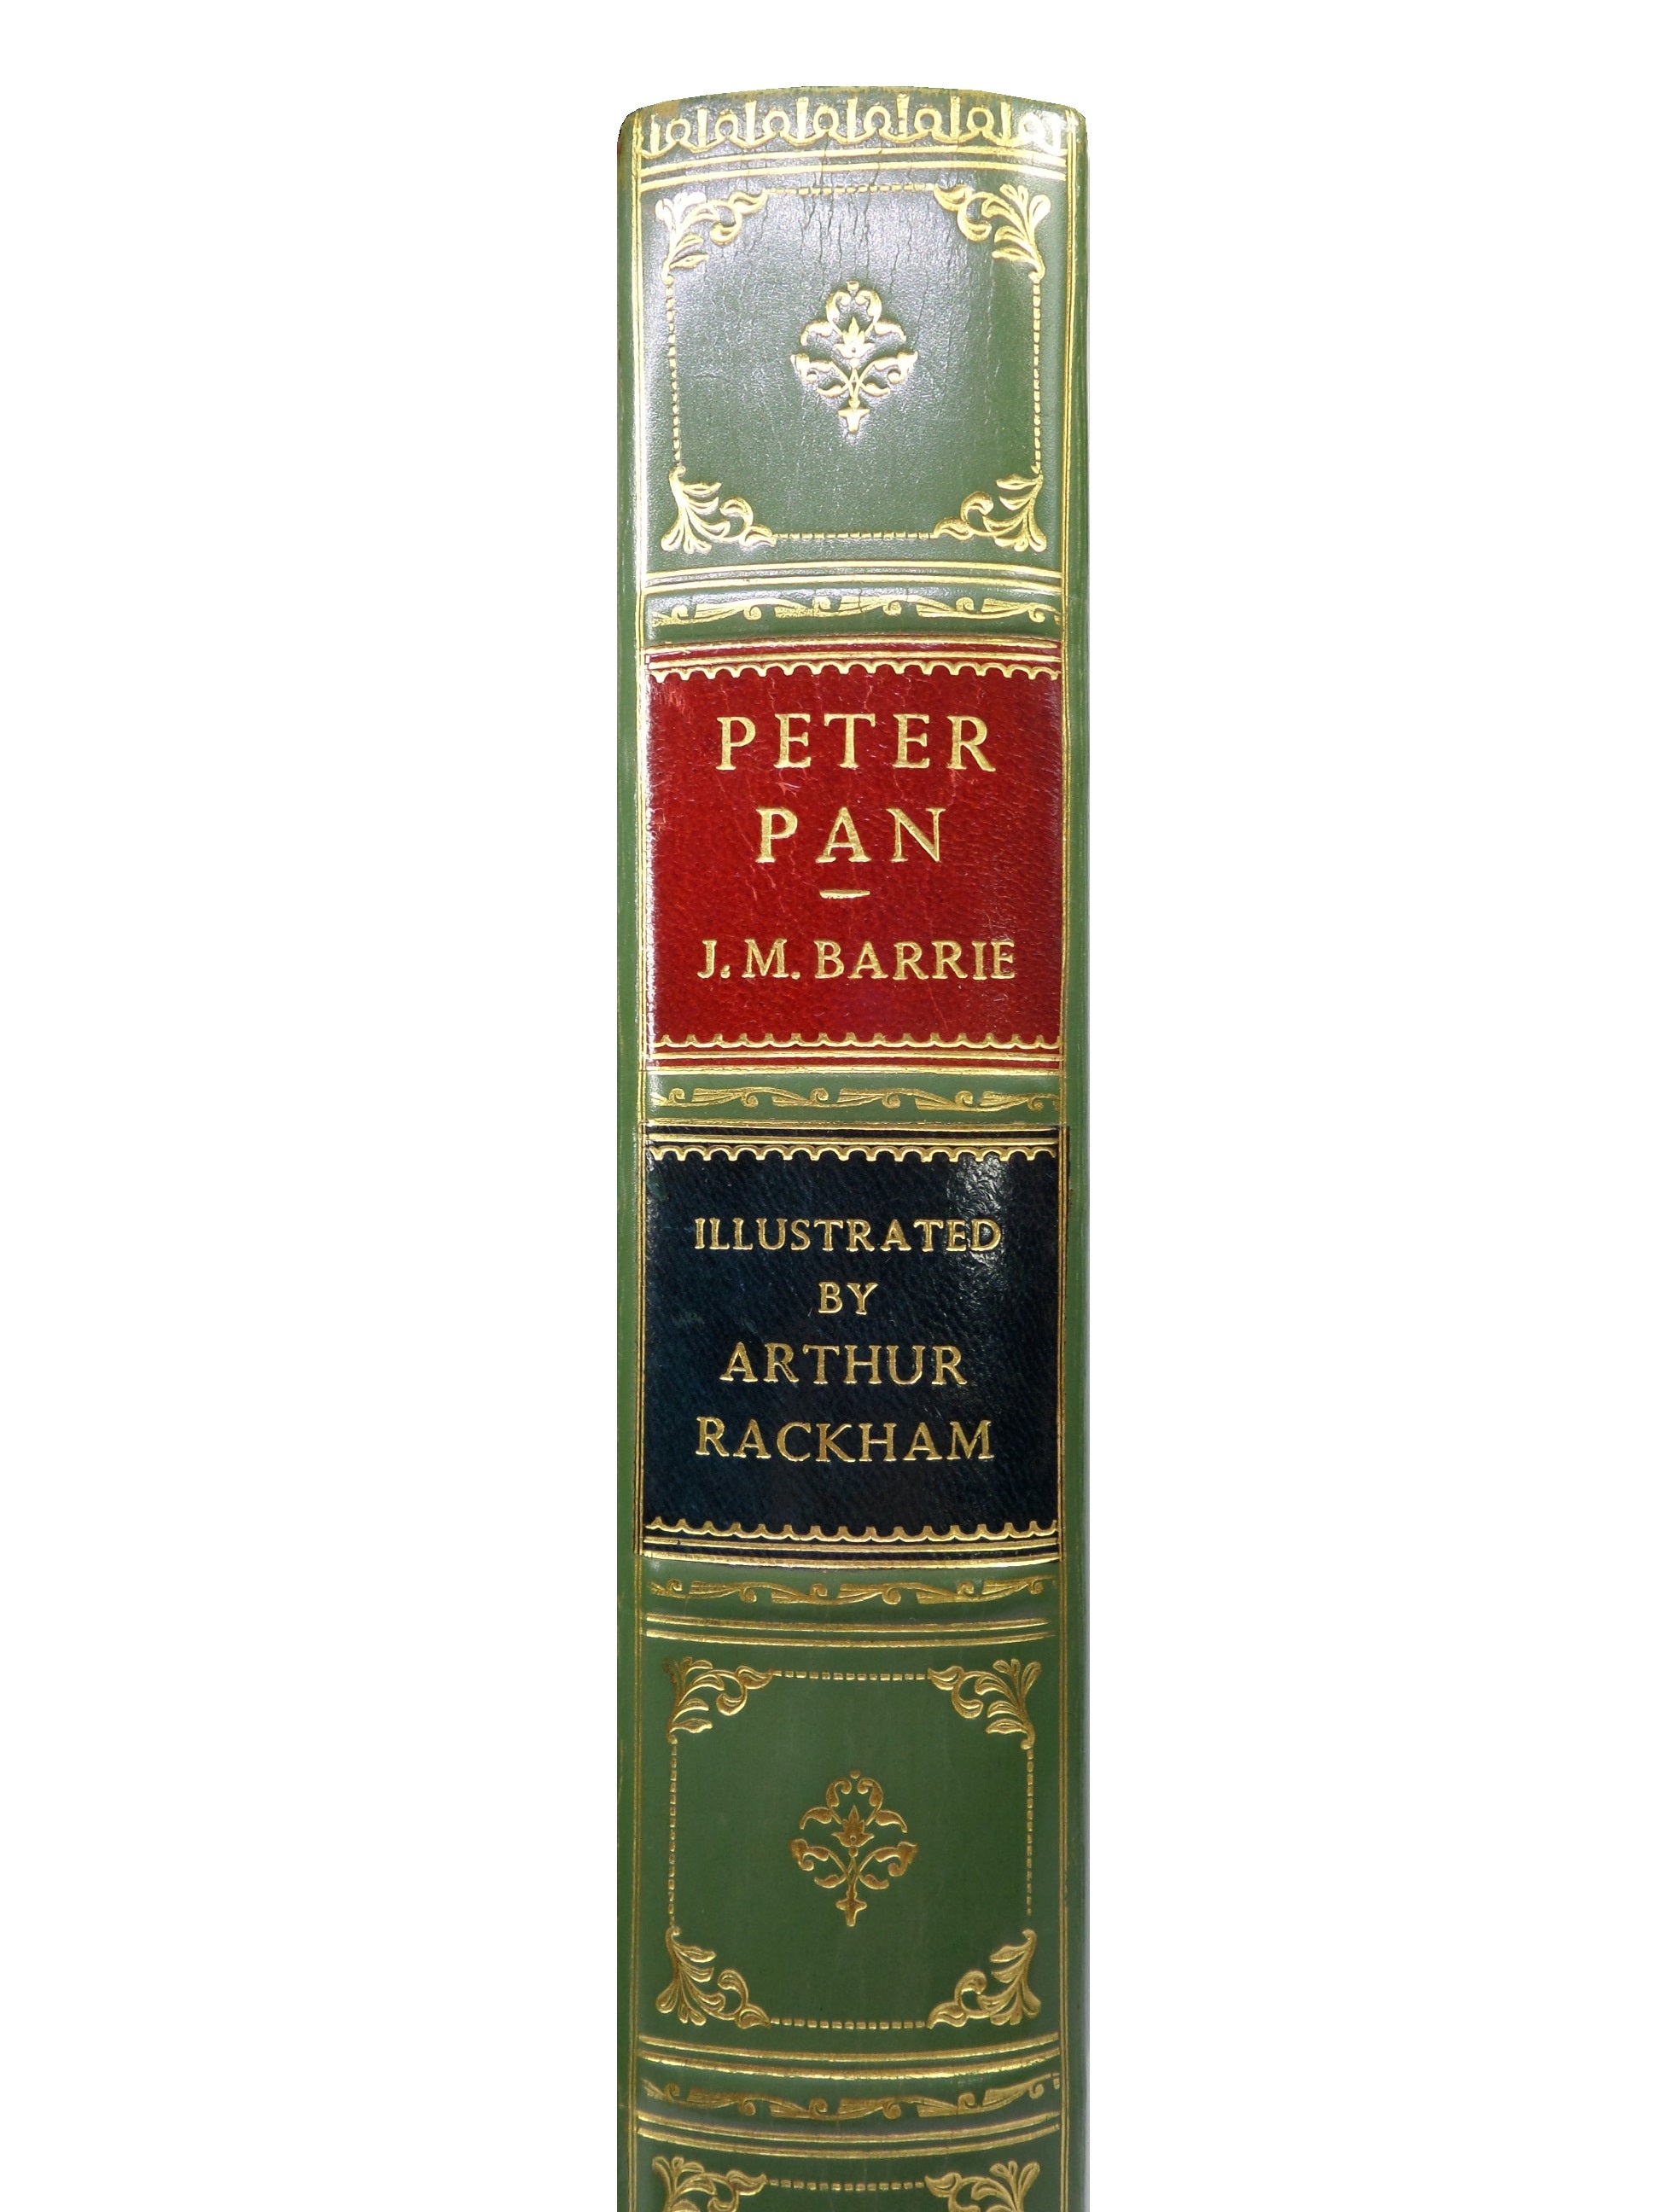 PETER PAN IN KENSINGTON GARDENS BY J.M. BARRIE 1912 ARTHUR RACKHAM ILLUSTRATIONS, FINE LEATHER BINDING BY BAYNTUN [RIVIERE]